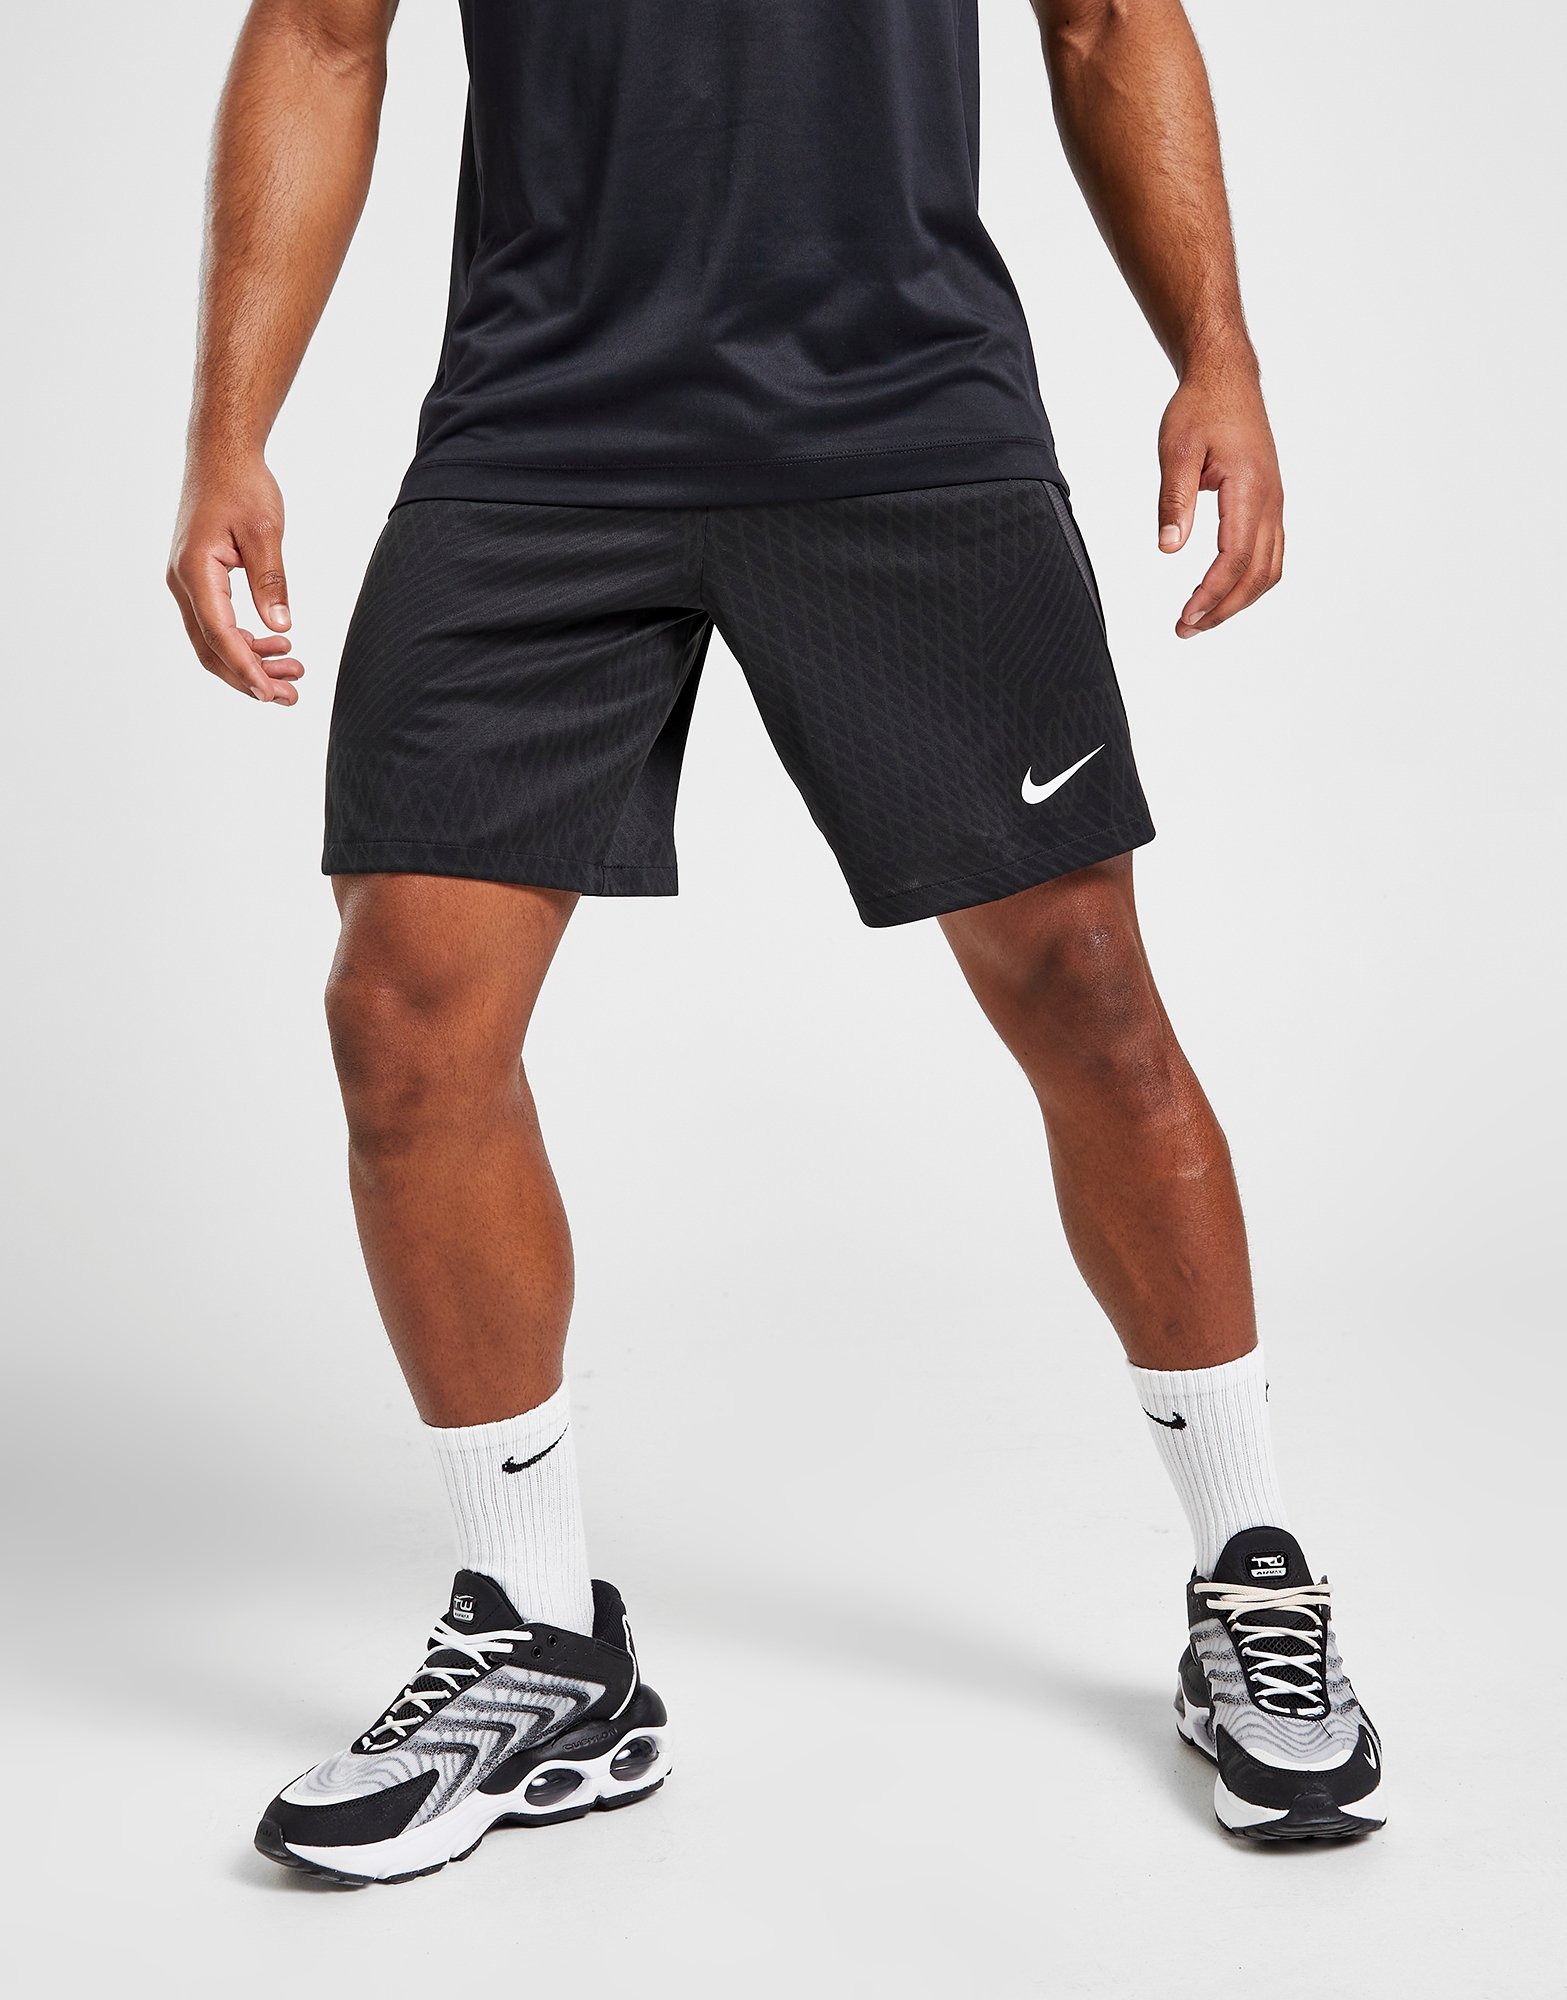 frost Overleve udtale Black Nike Strike Shorts | JD Sports UK